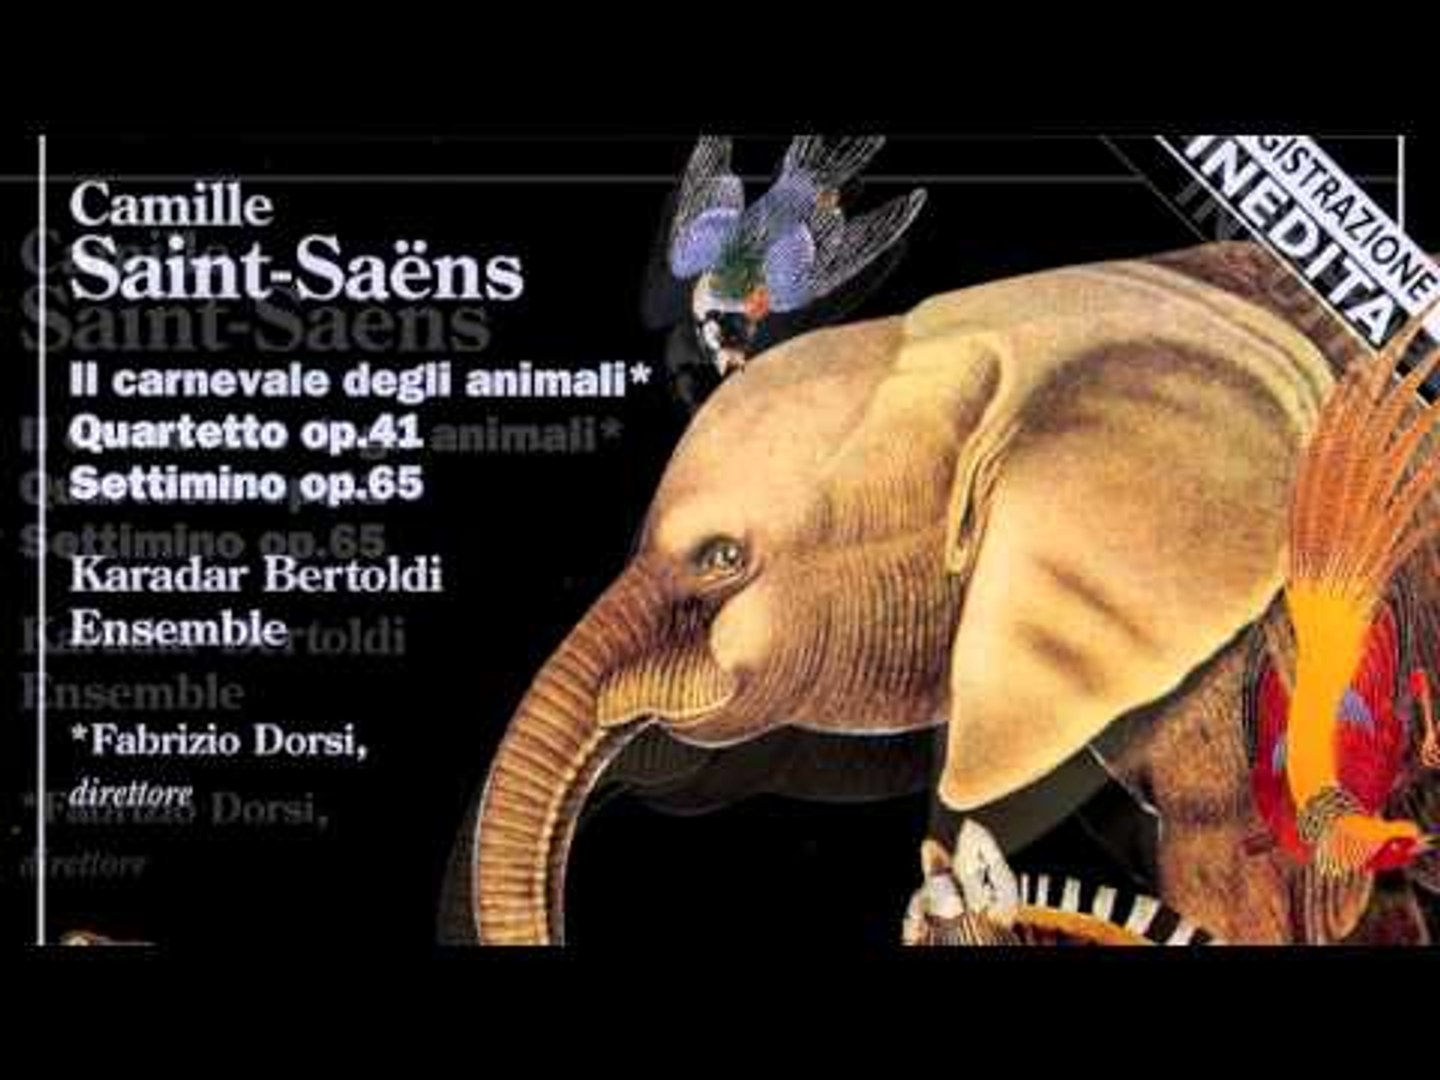 Il Carnevale Degli Animali - Galline e galli - Camille Saint-Saëns - Video  Dailymotion